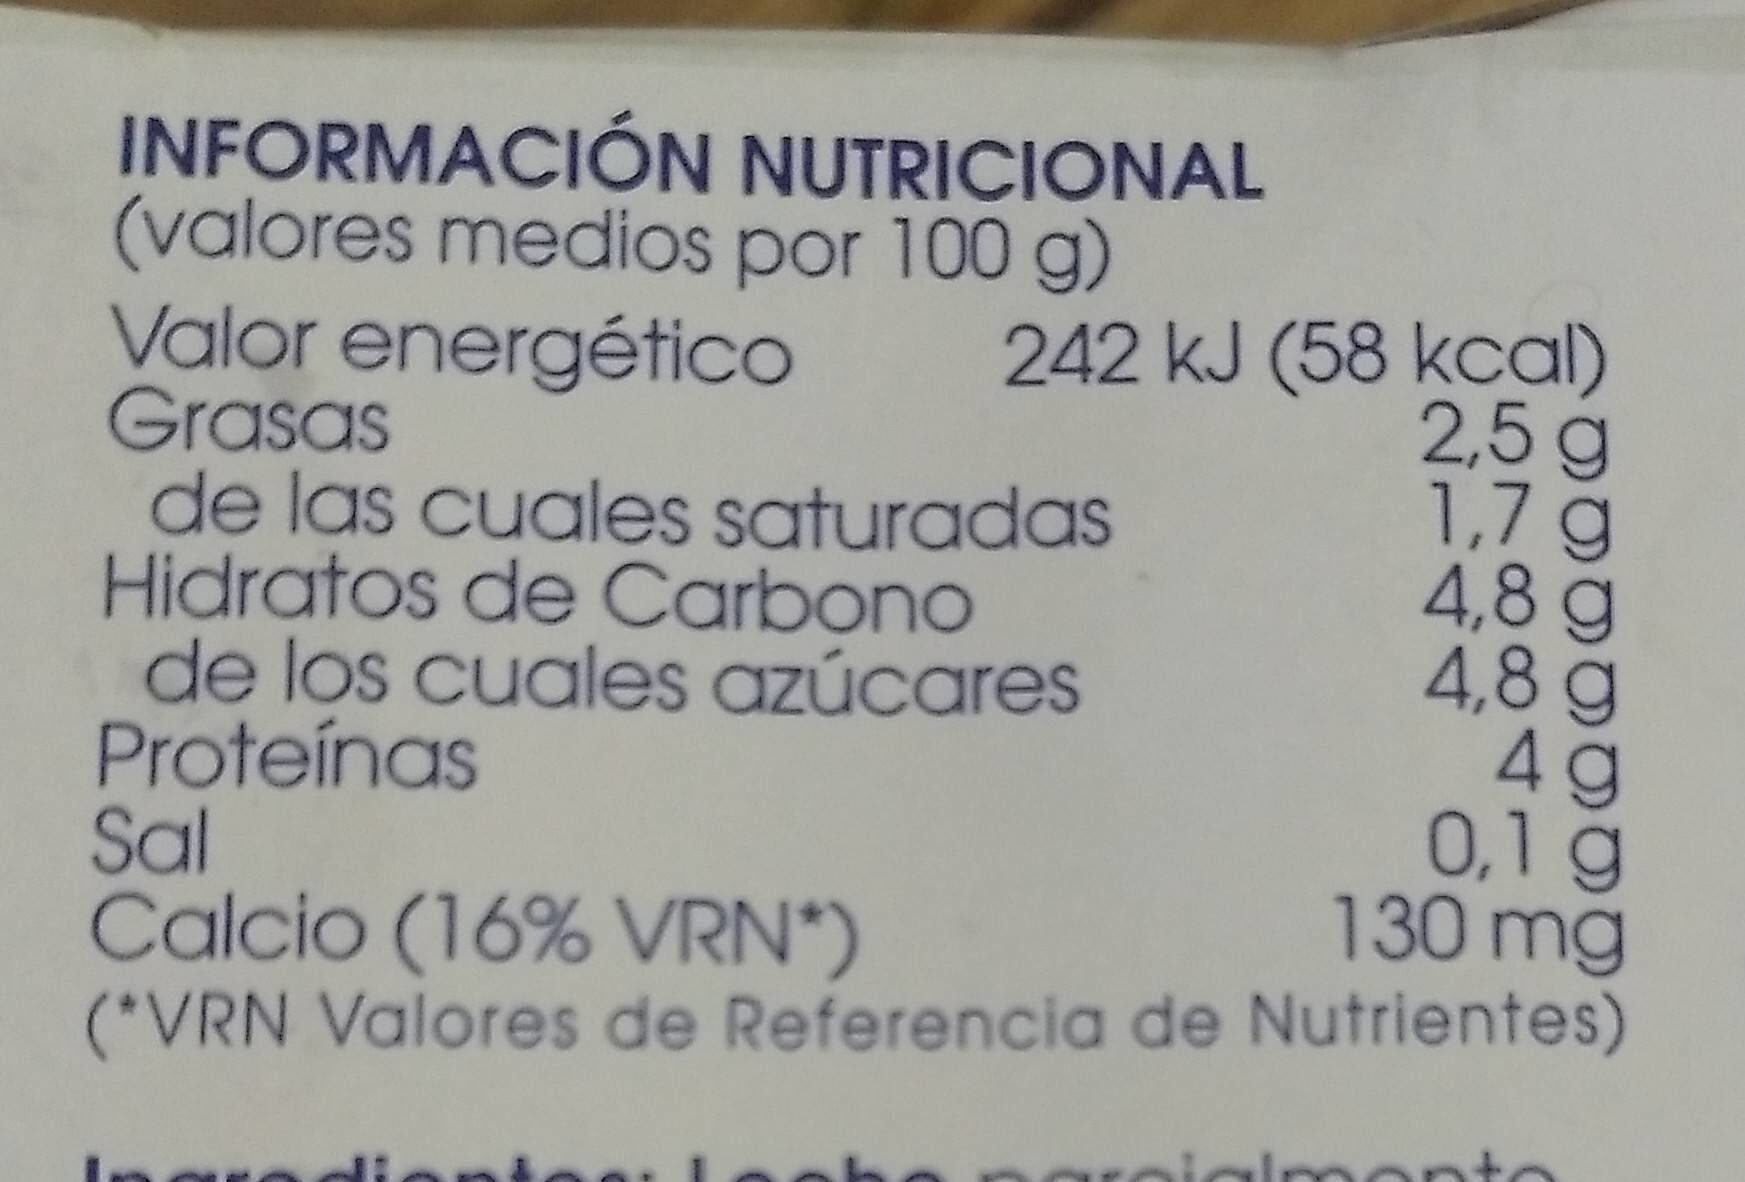 Yogur natural - Nutrition facts - es